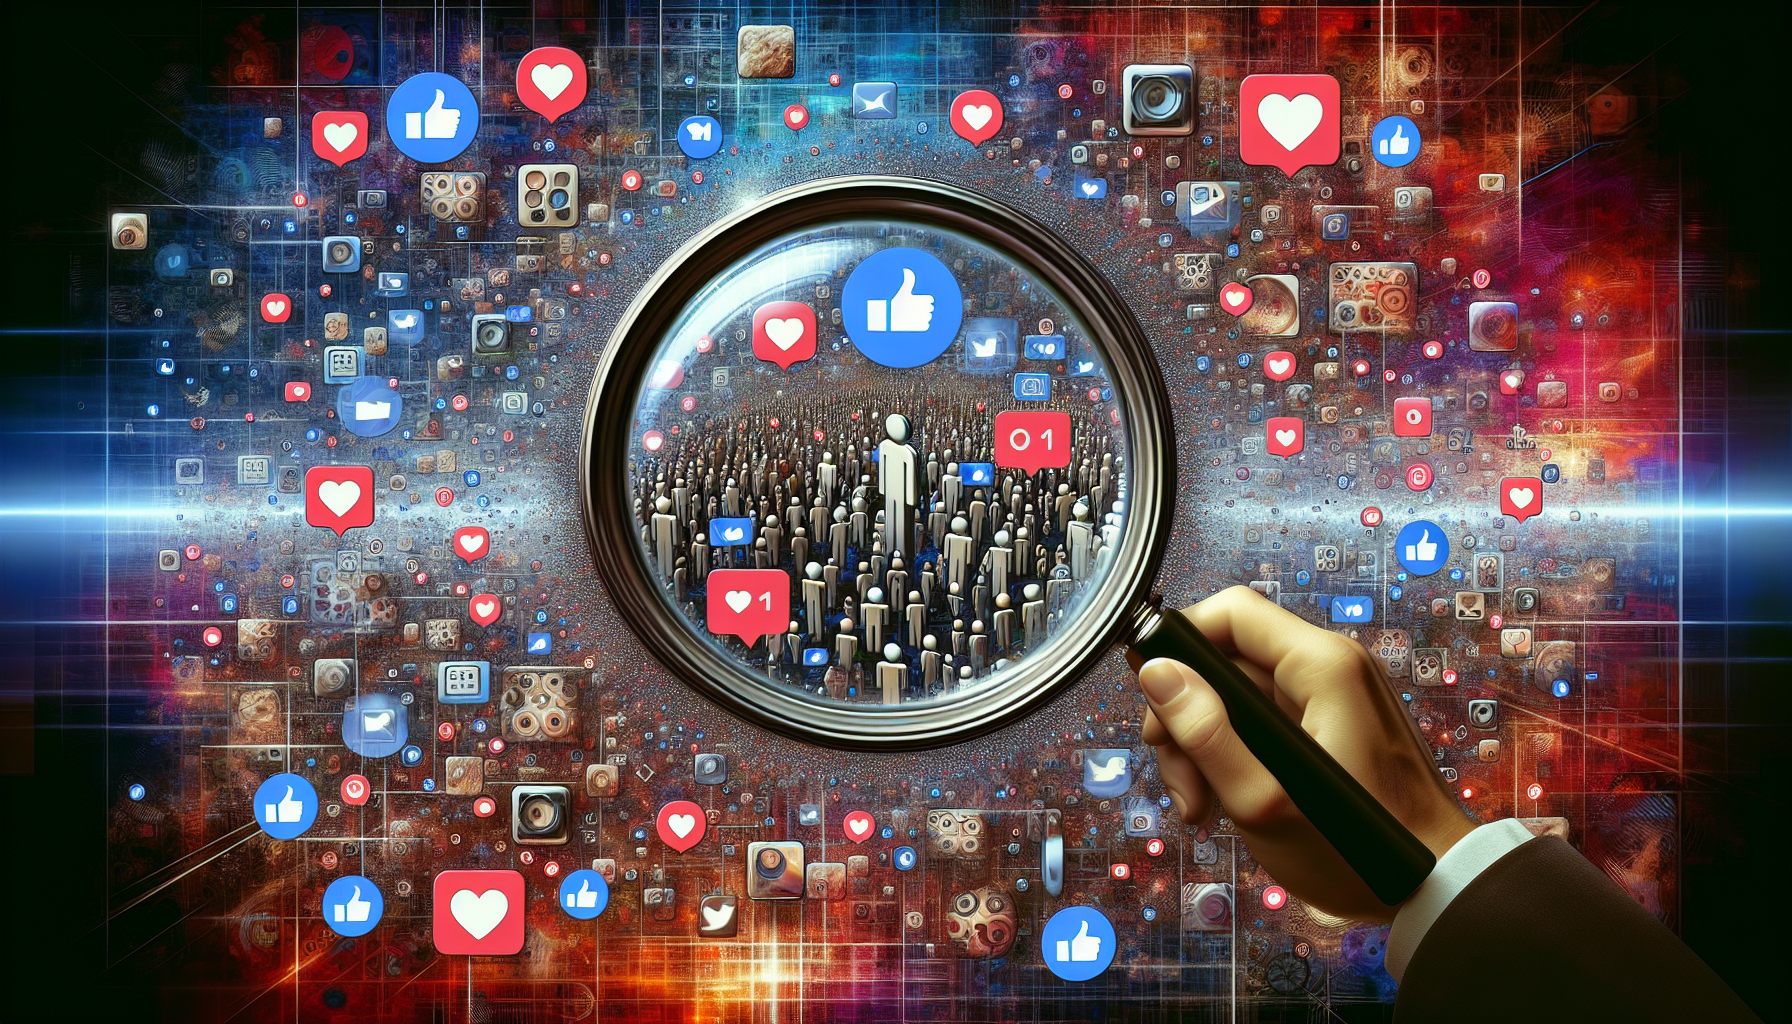 Amplifying engagement through social media scrutiny